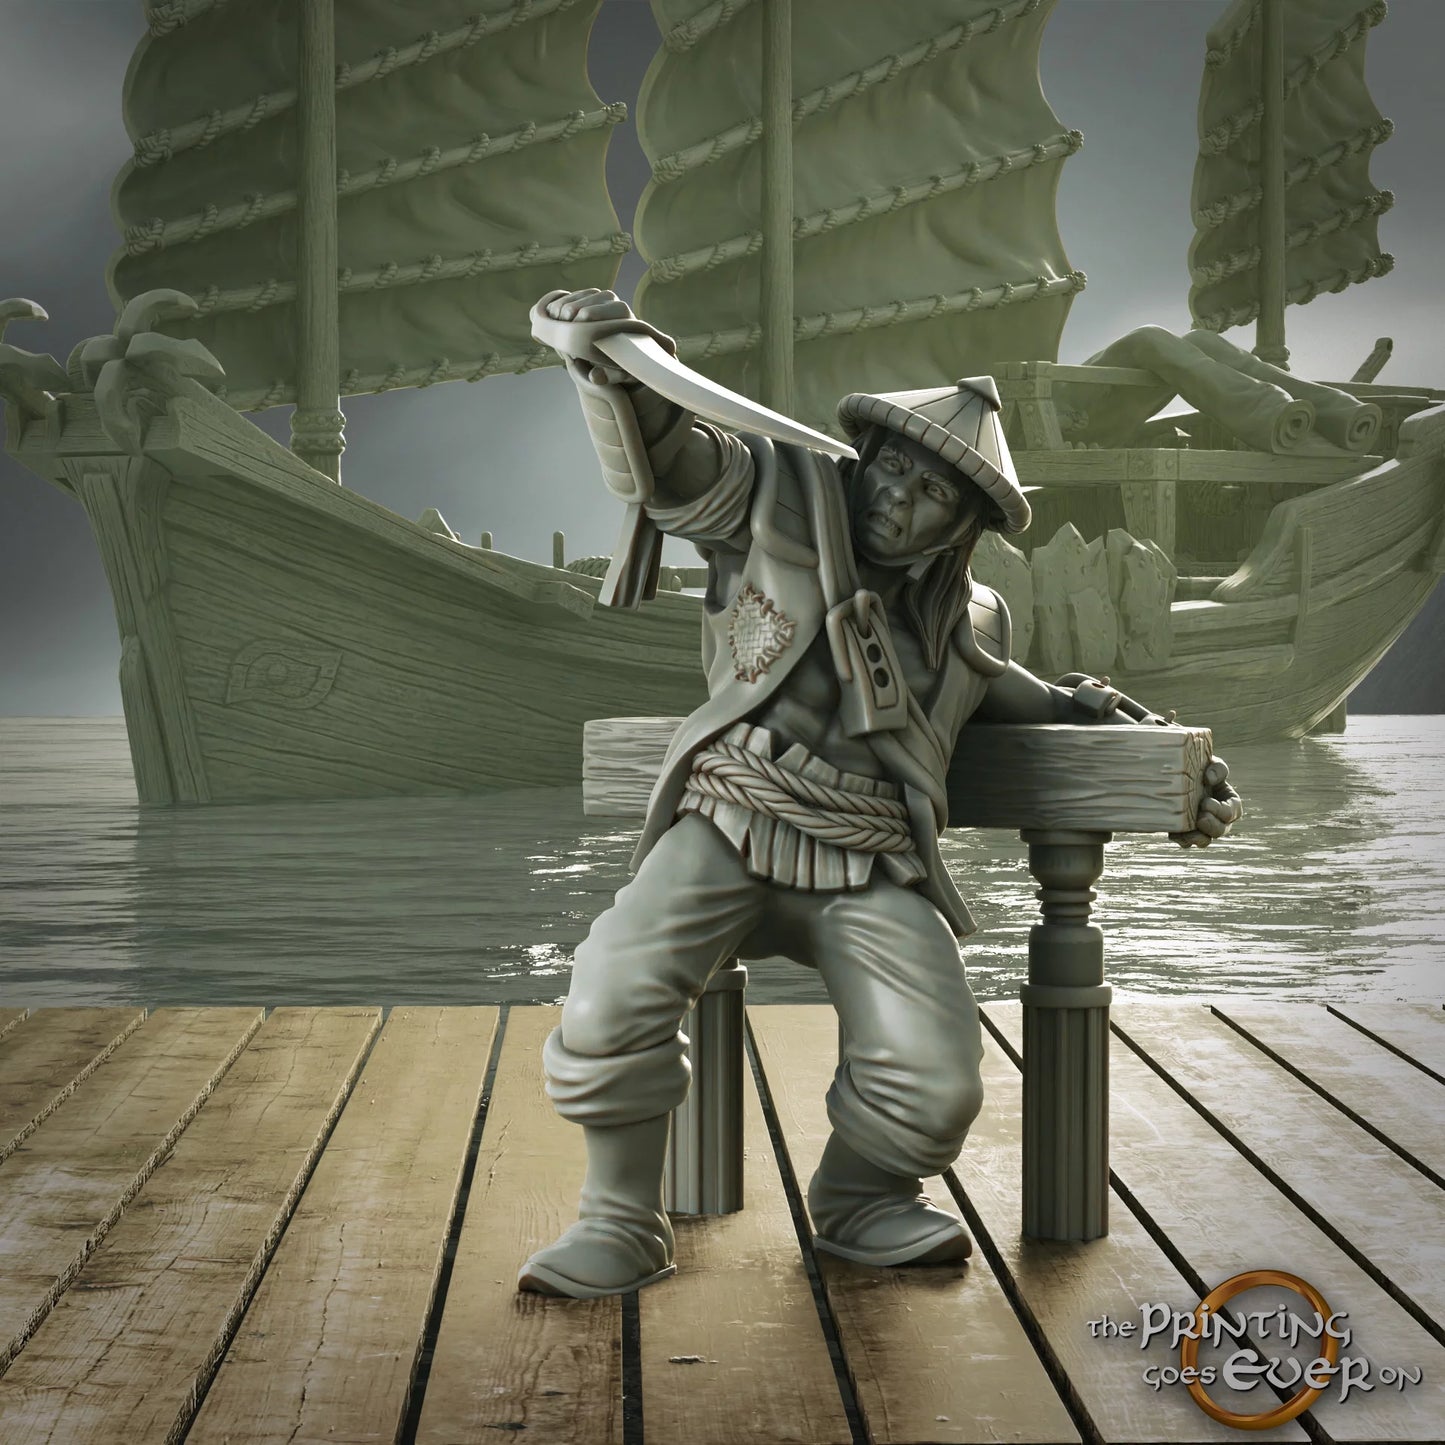 Pirate Ship Crew